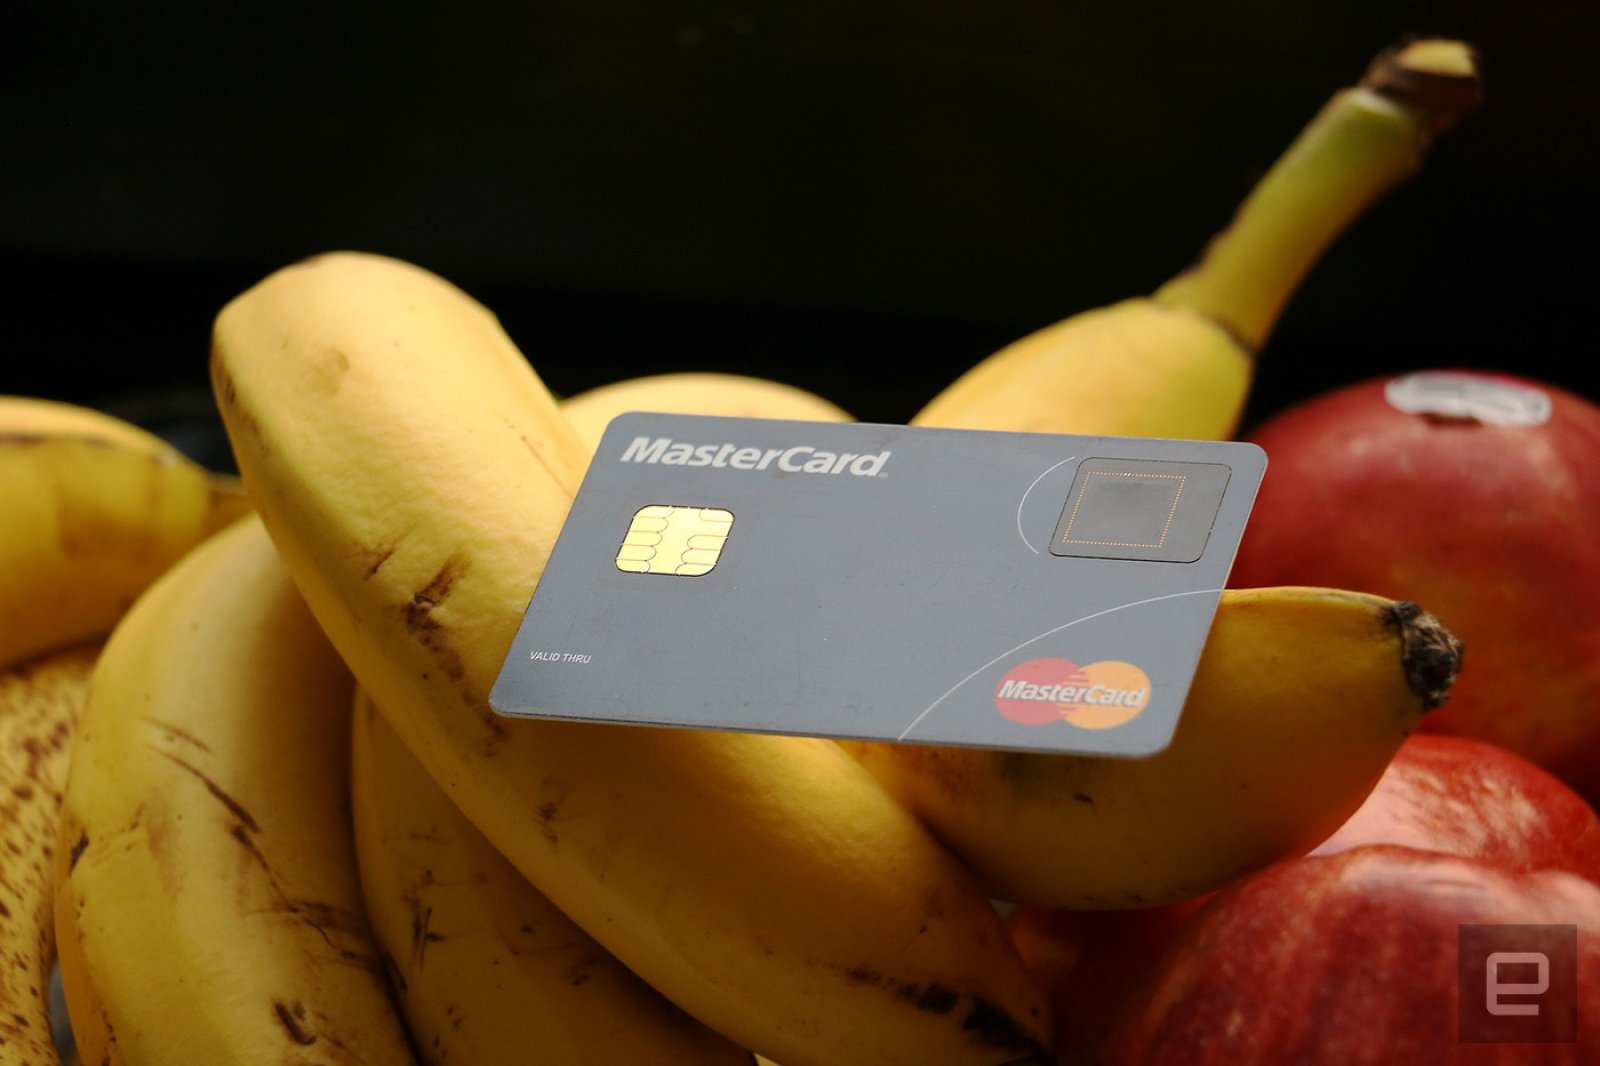 MasterCard starts testing Biometric card with fingerprint sensors 1